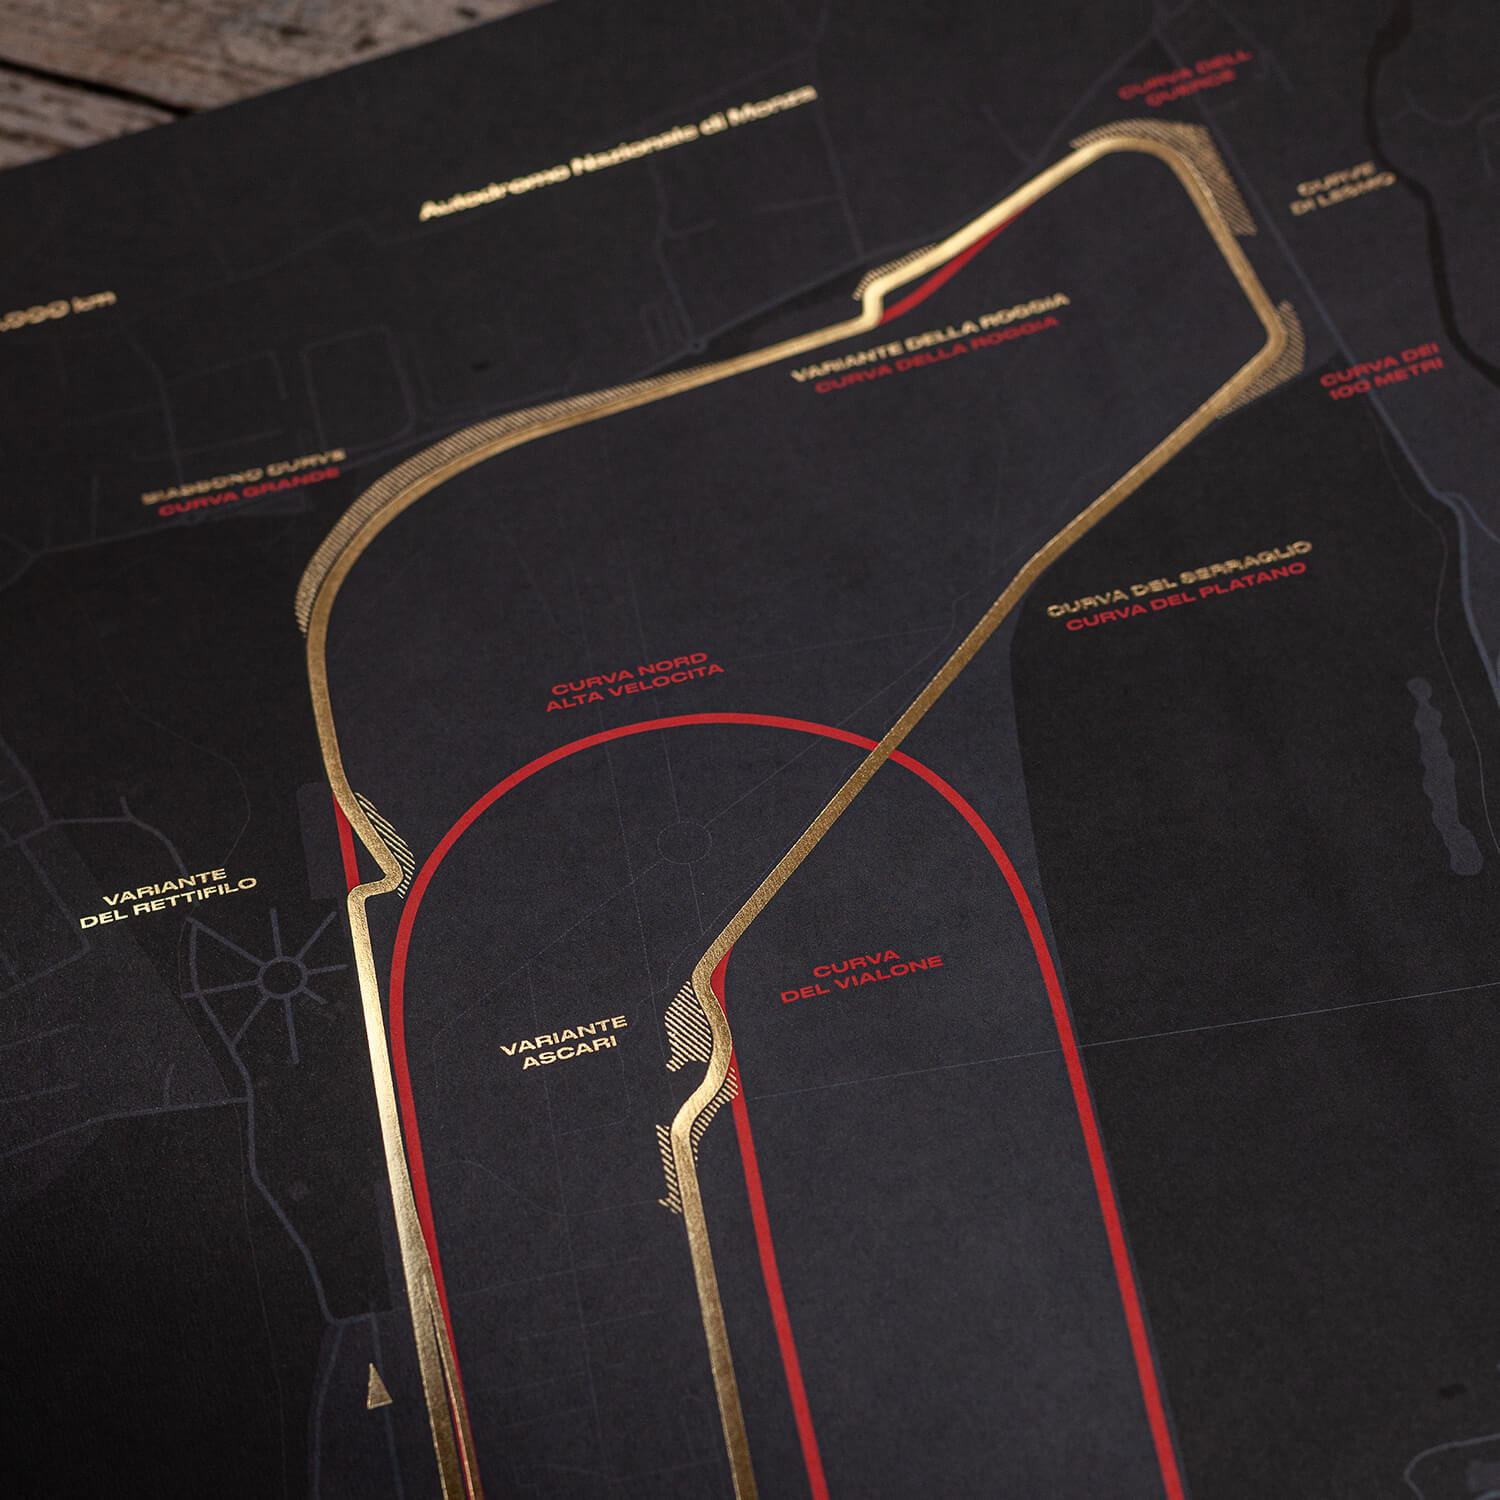 Monza Circuit - Track Evolution - 100th Anniversary | Collector’s Edition